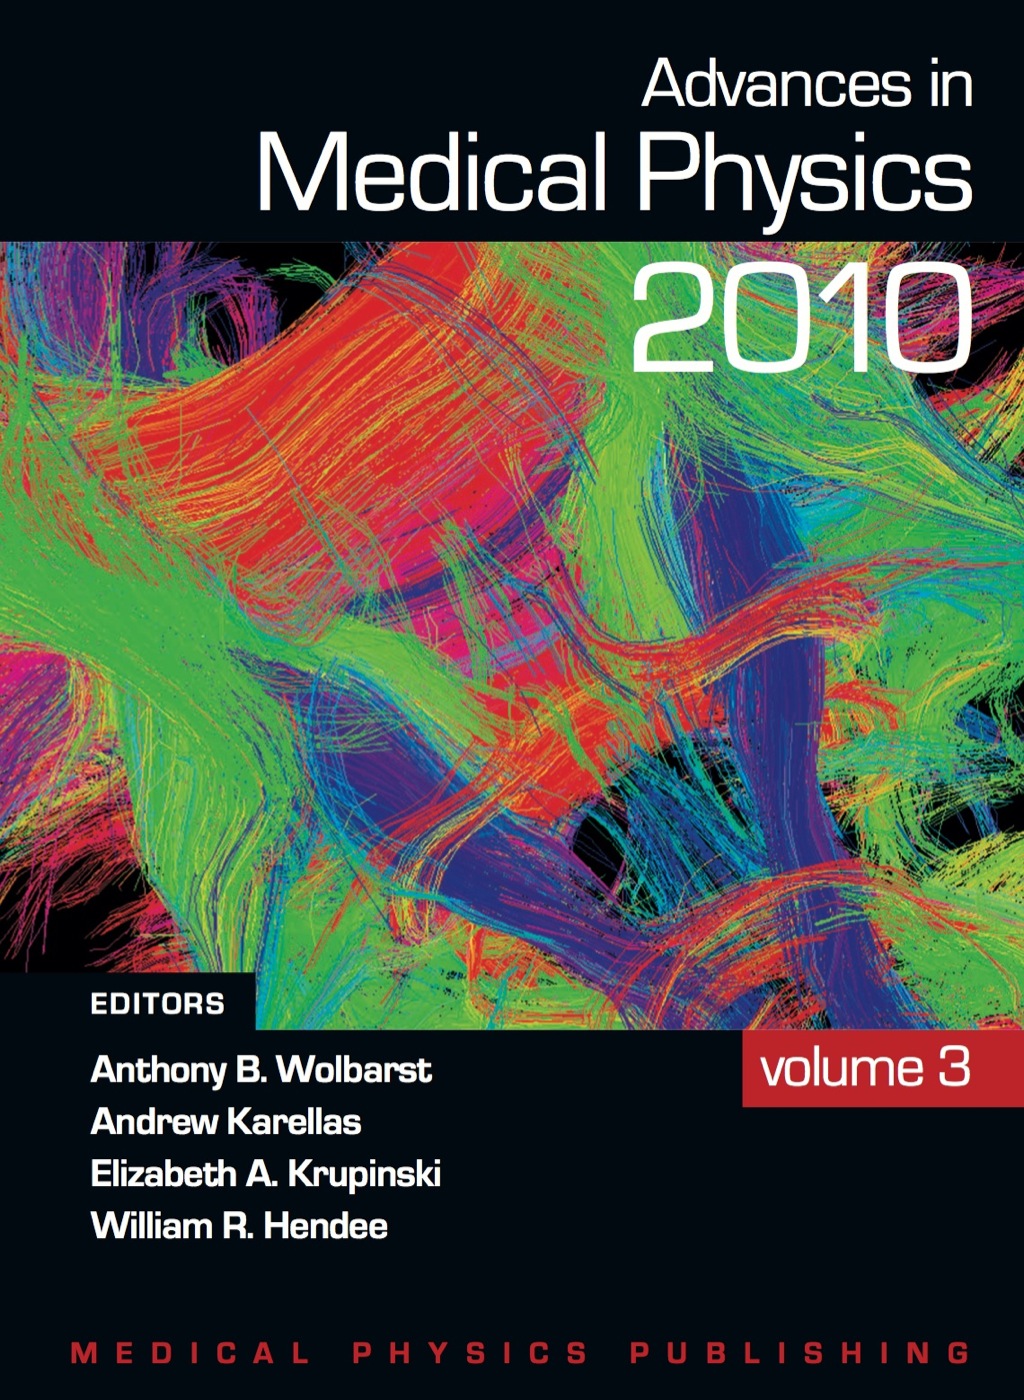 Advances in Medical Physics: 2010 (eBook) - Anthony B. Wolbarst; Andrew Karellas; Elizabeth A. Krupinski; William R. Hendee,